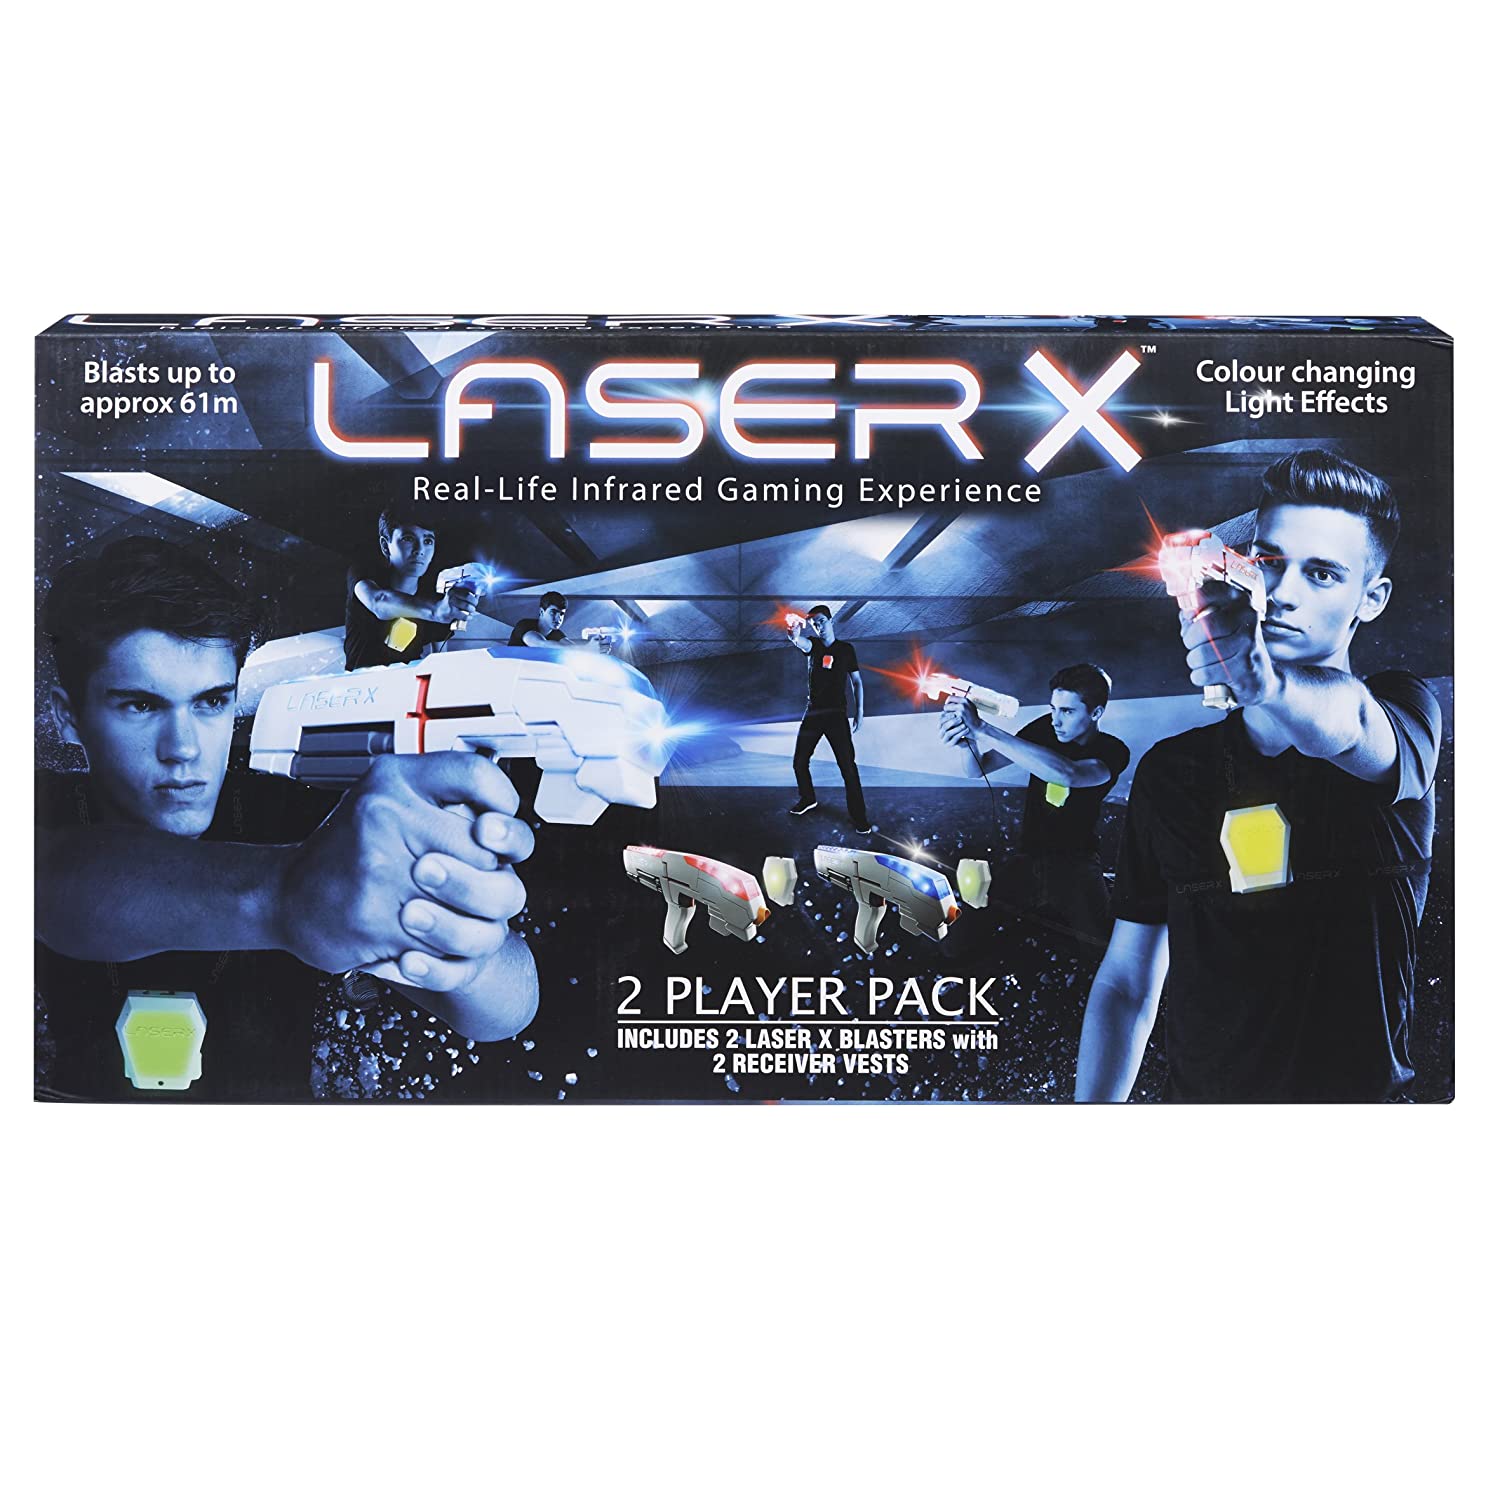 Laser X 88016 Two Player Real Life Laser Gaming Experience Gaming Set - Hatke